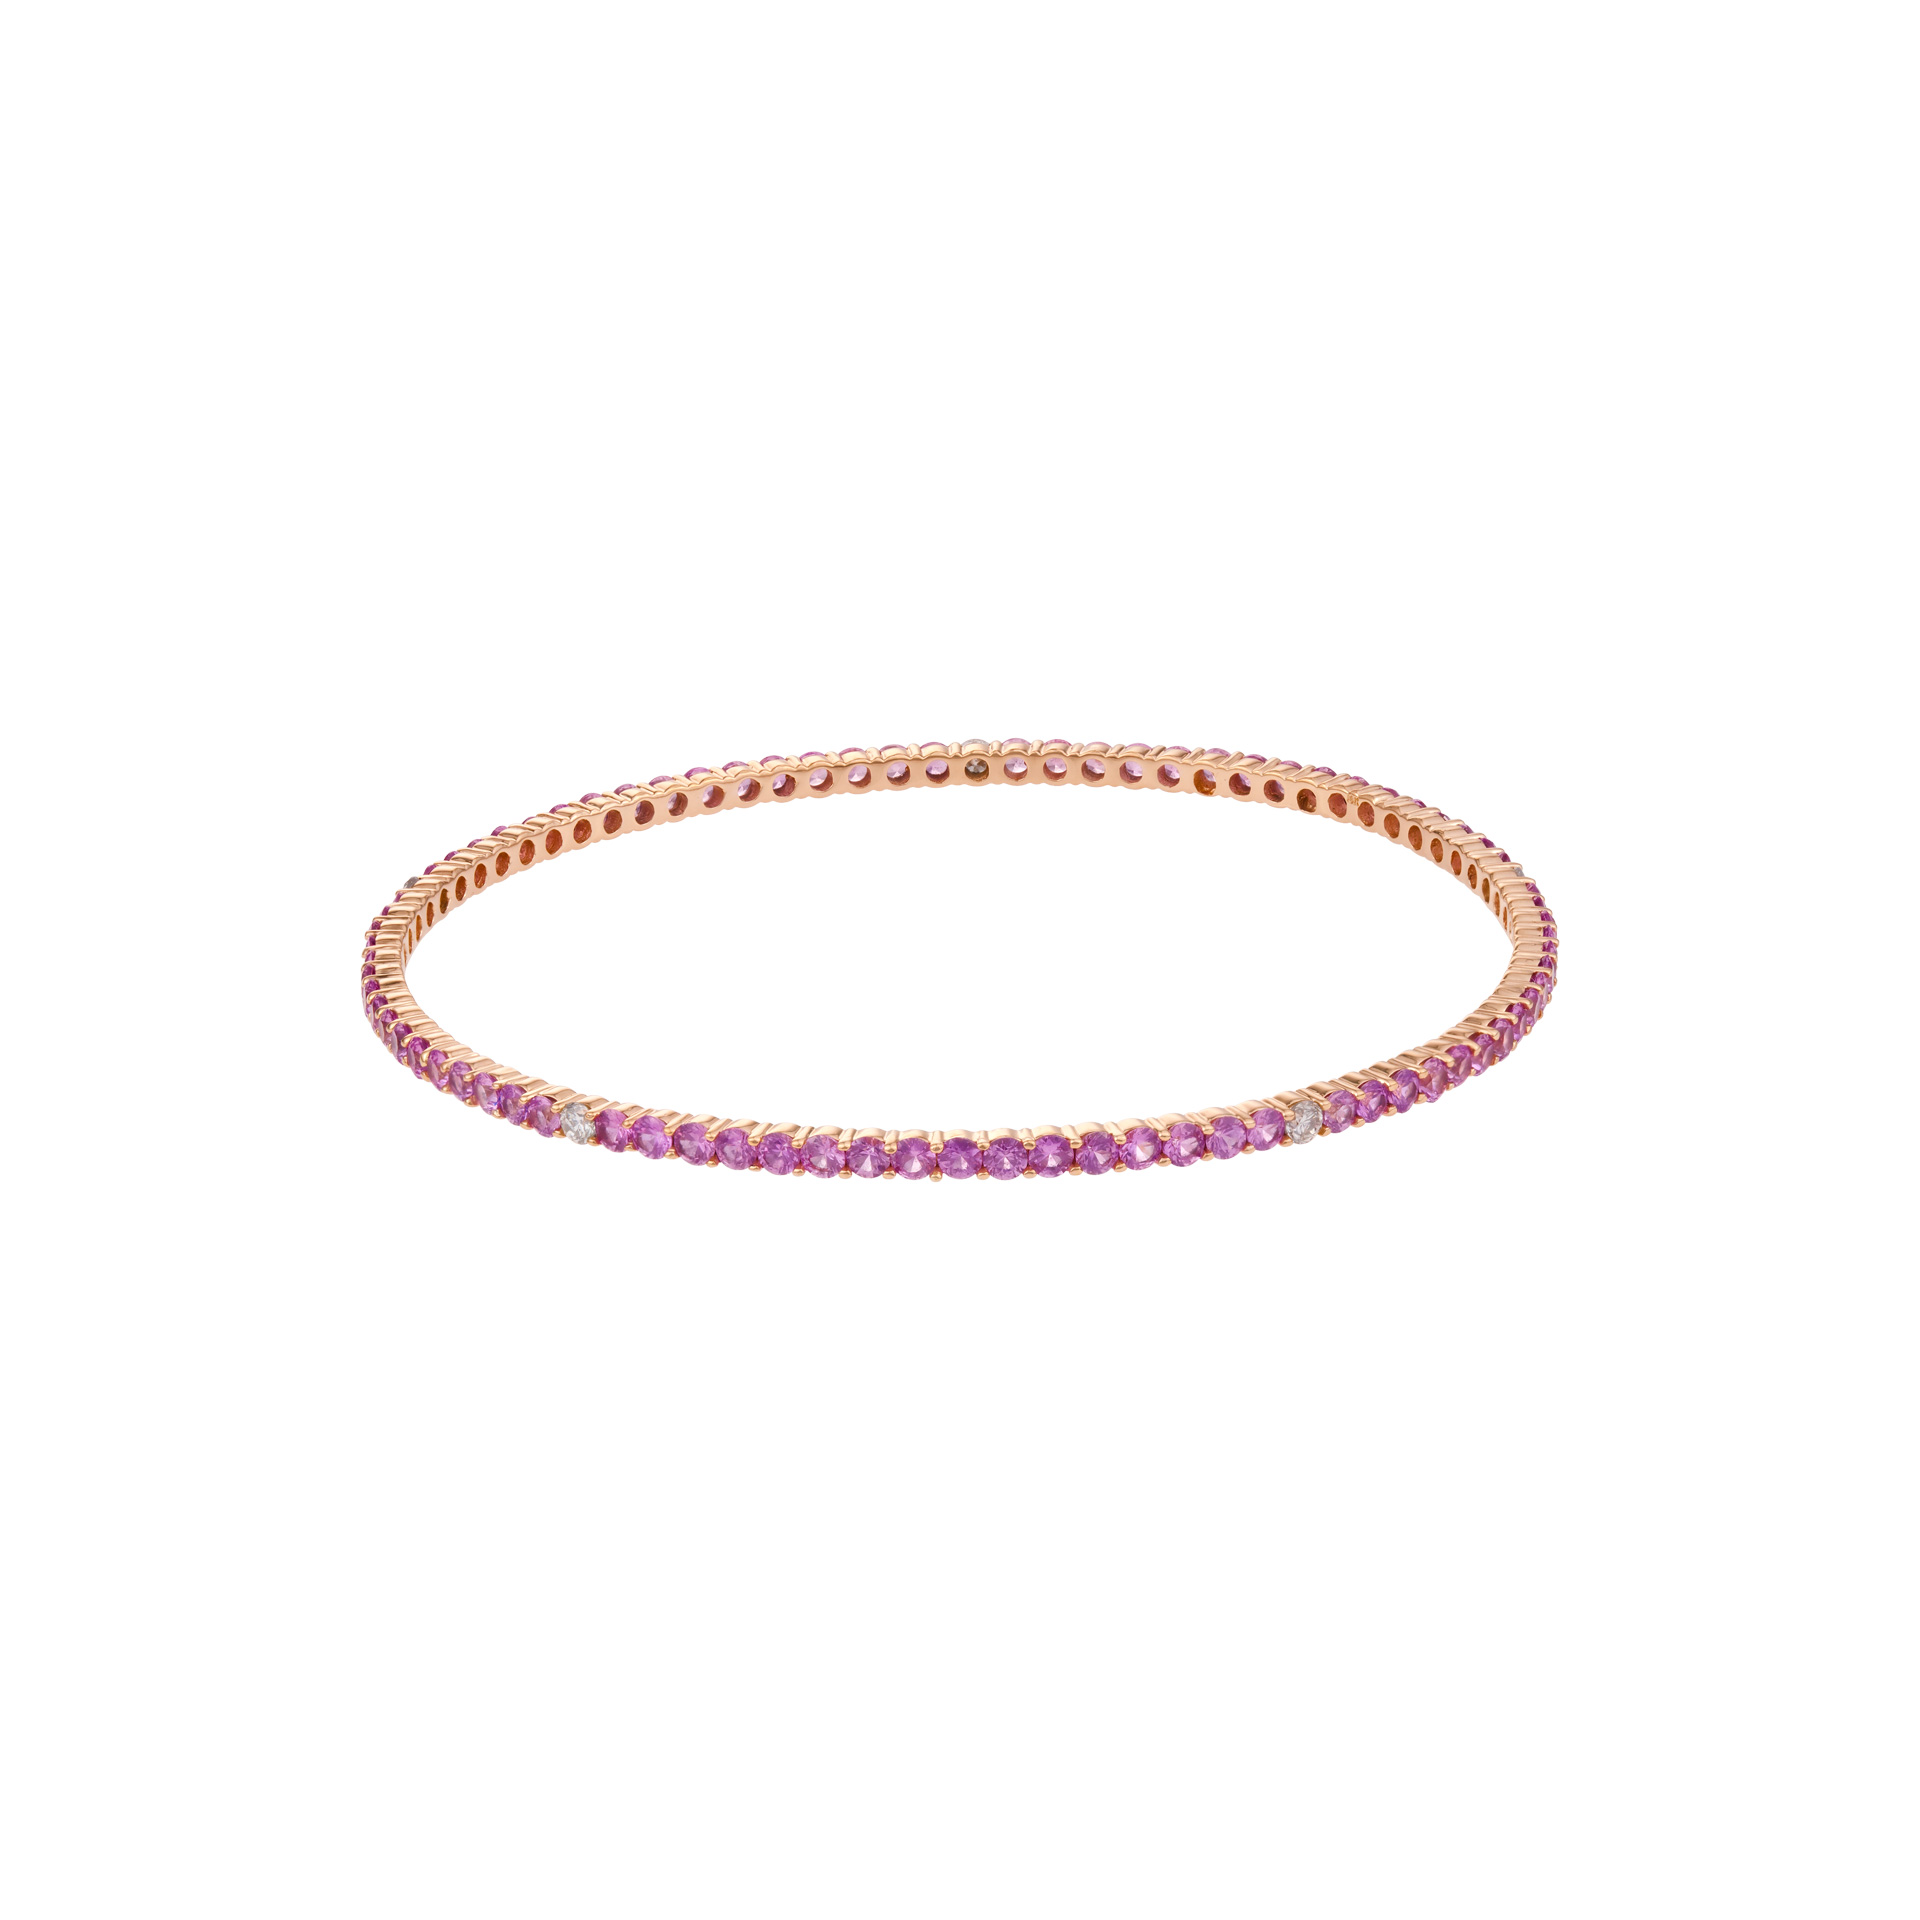 Pink sapphire & diamond bangle in 18k rose gold.